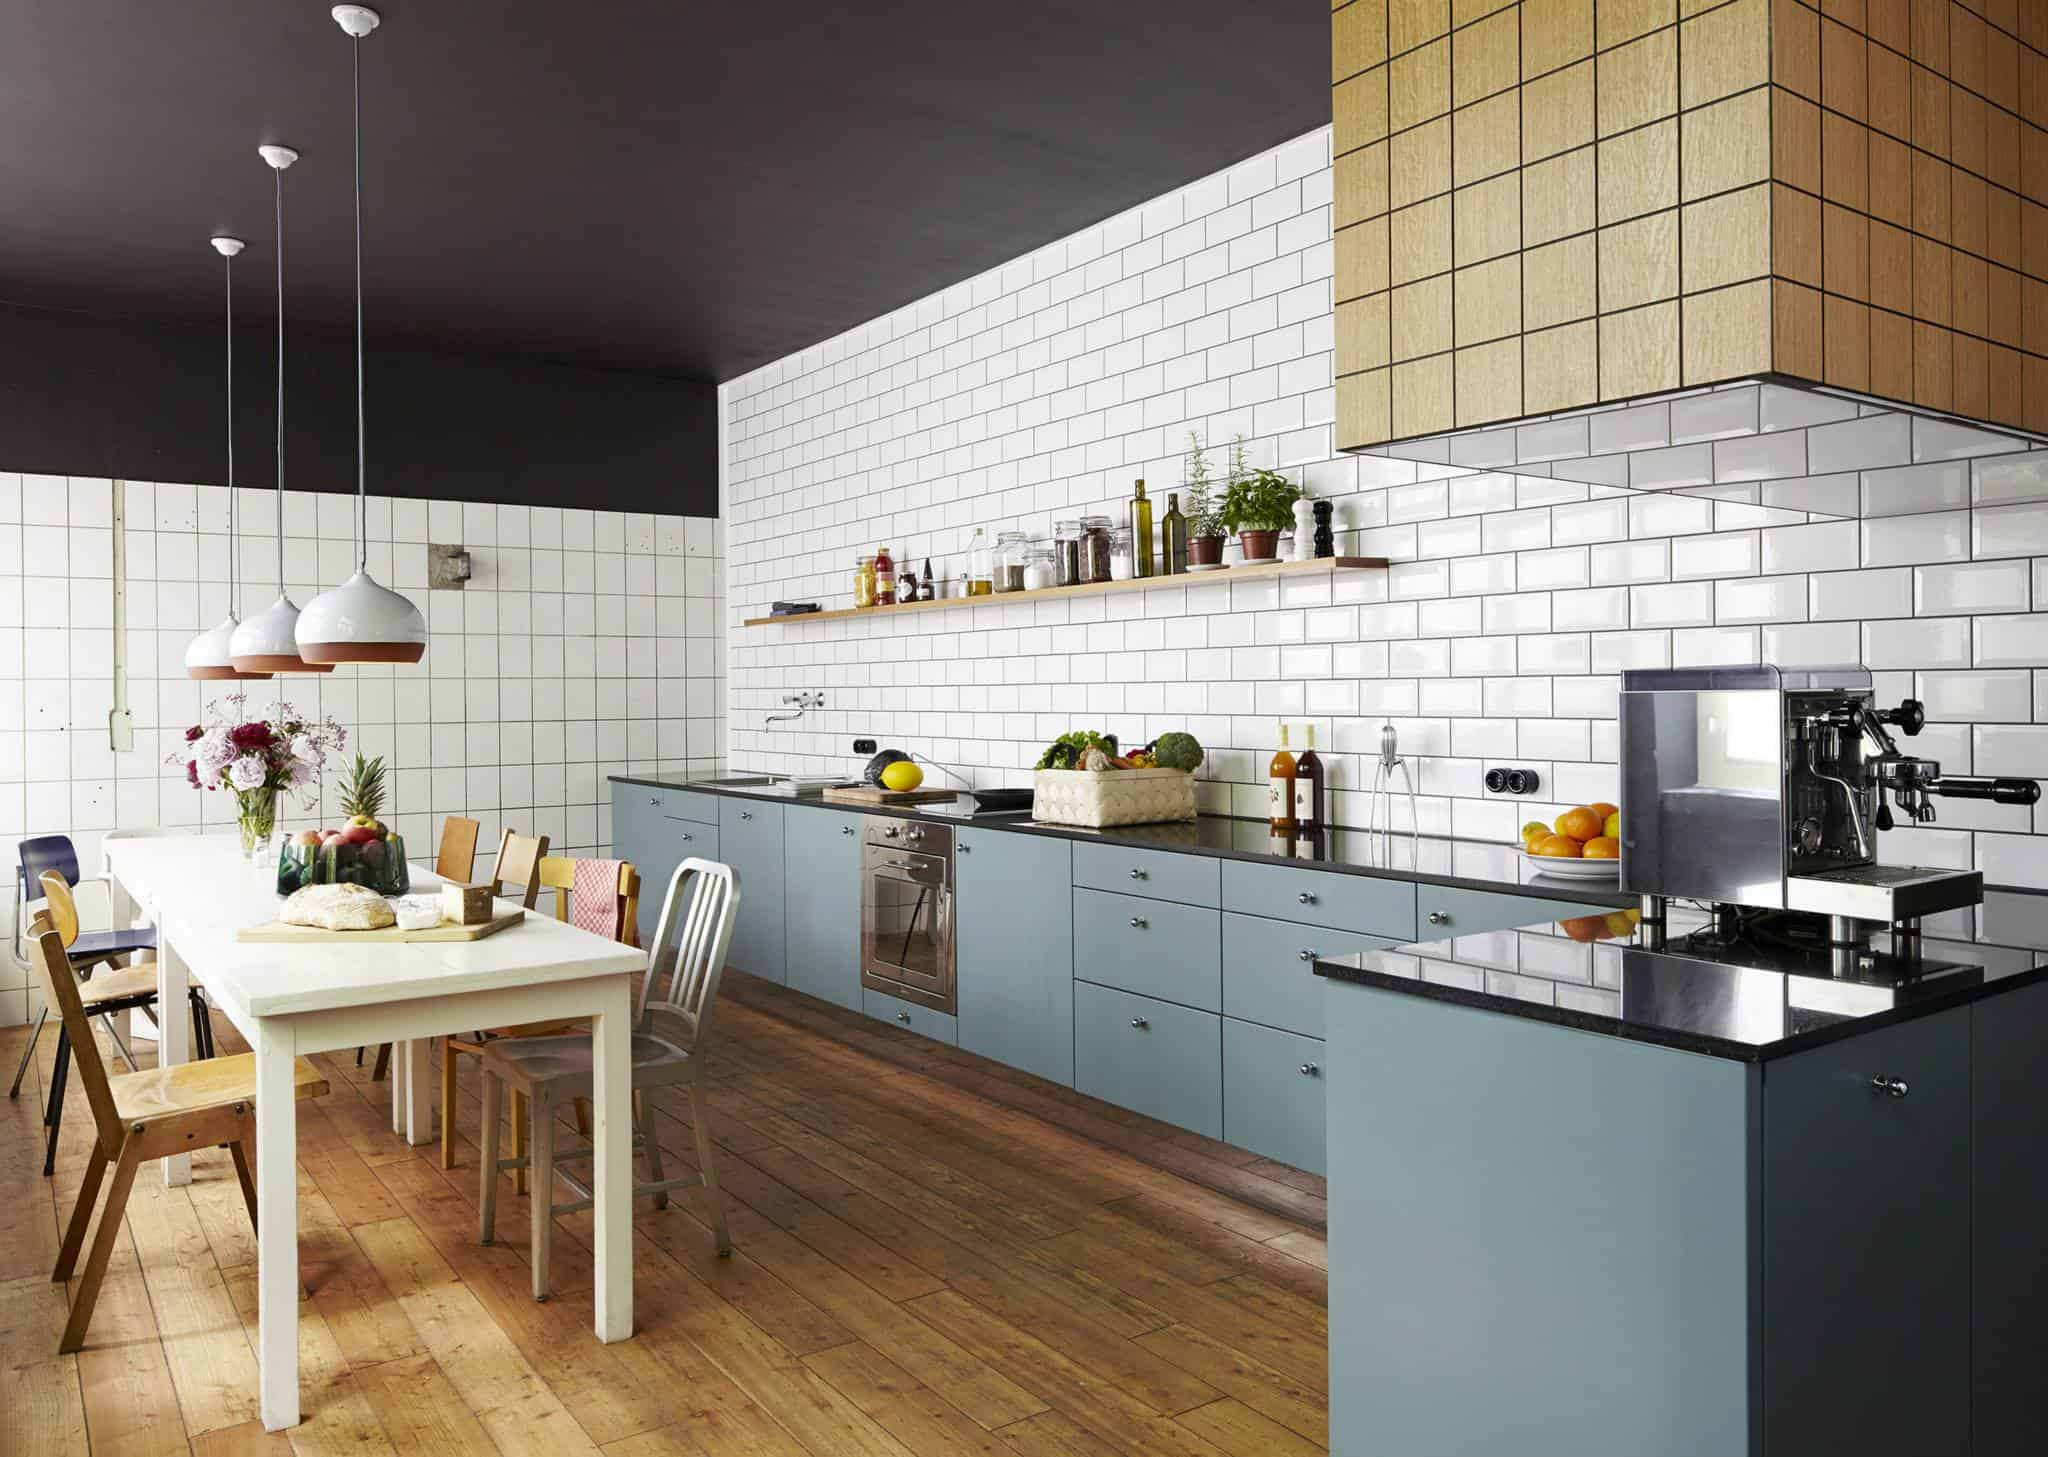 Kitchen Tile Design
 White Subway Tile Kitchen Designs are Incredibly Universal